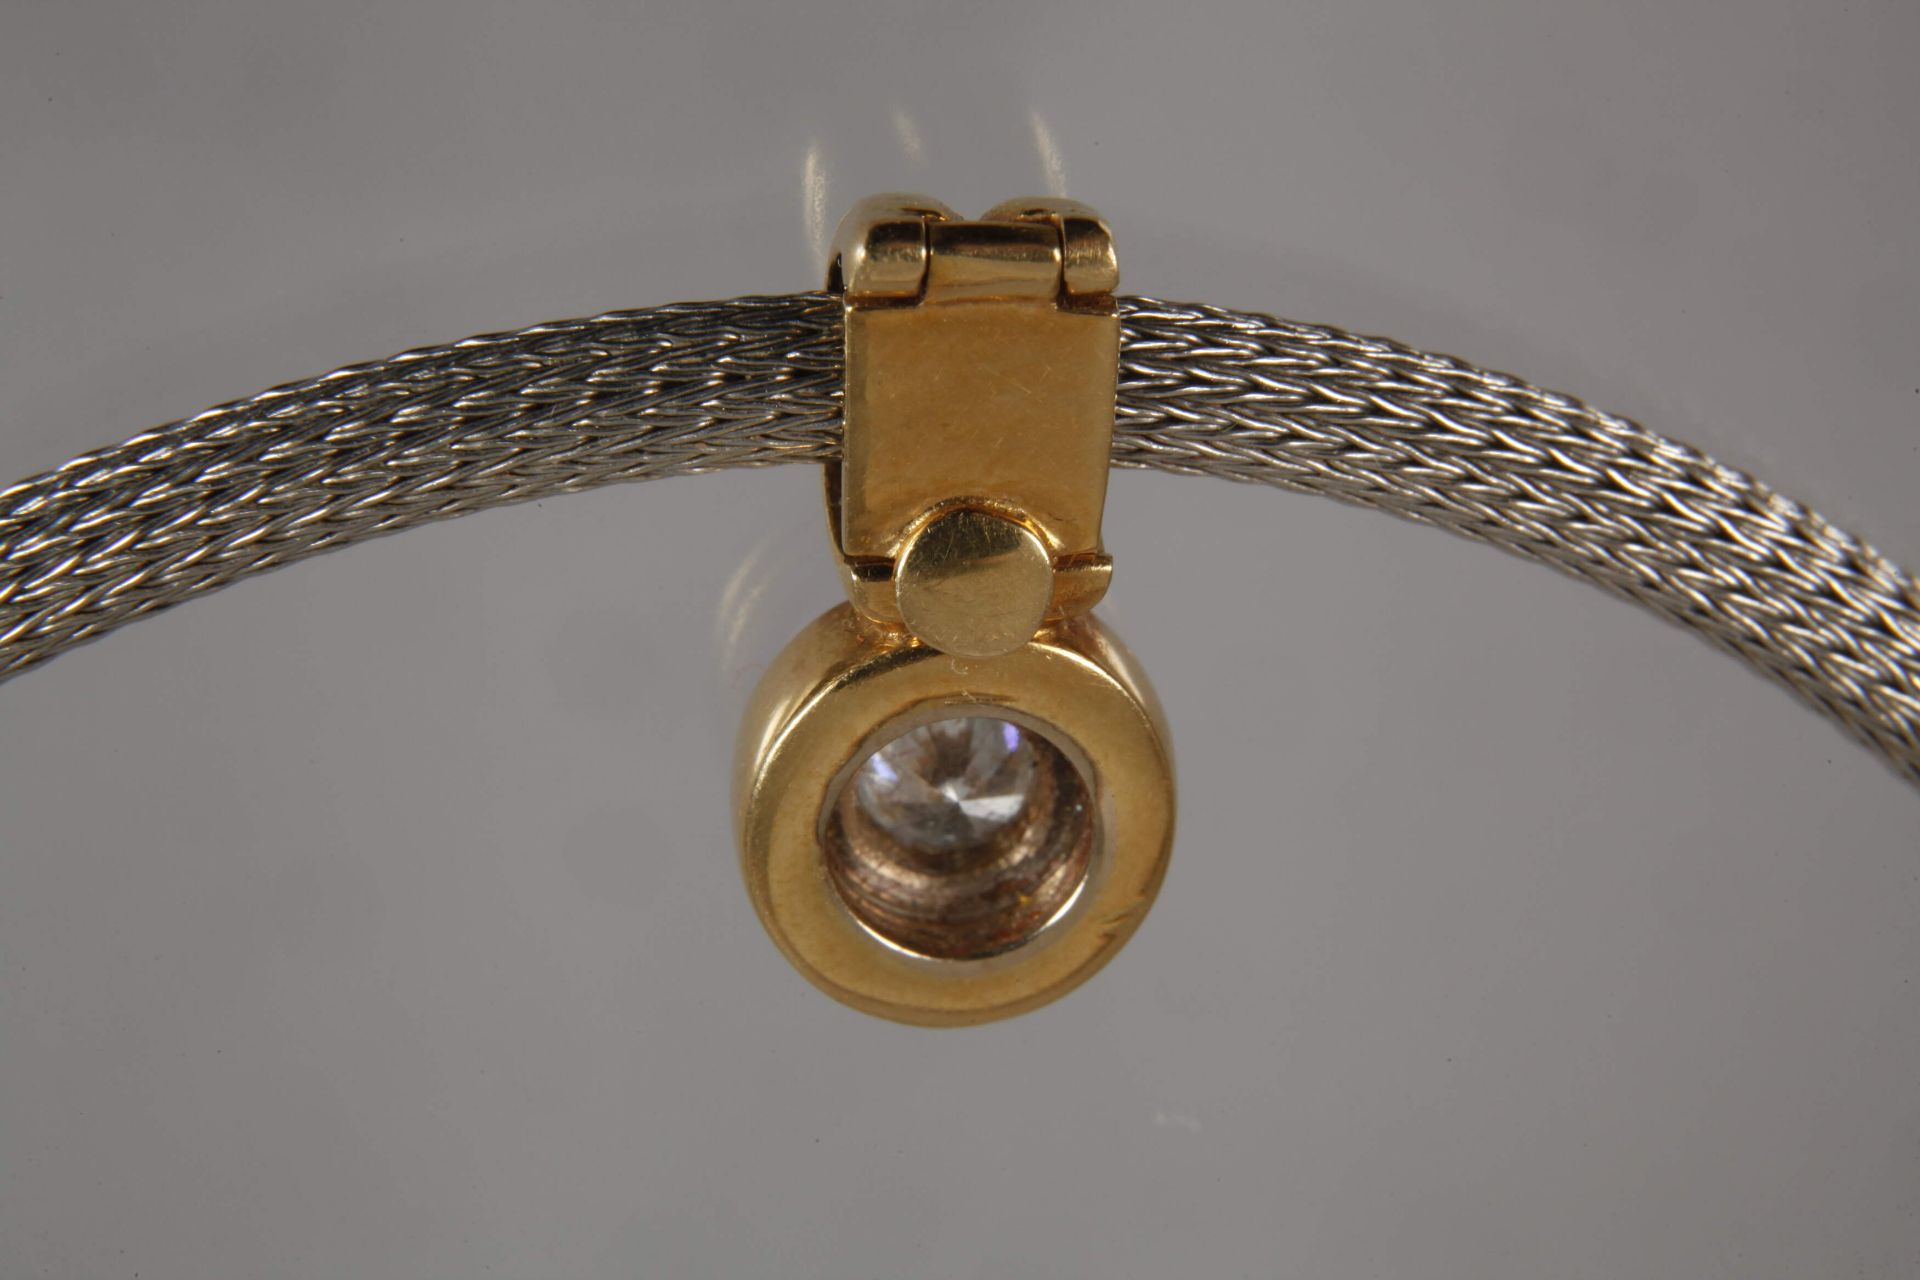 Diamond pendant on chain - Image 2 of 3